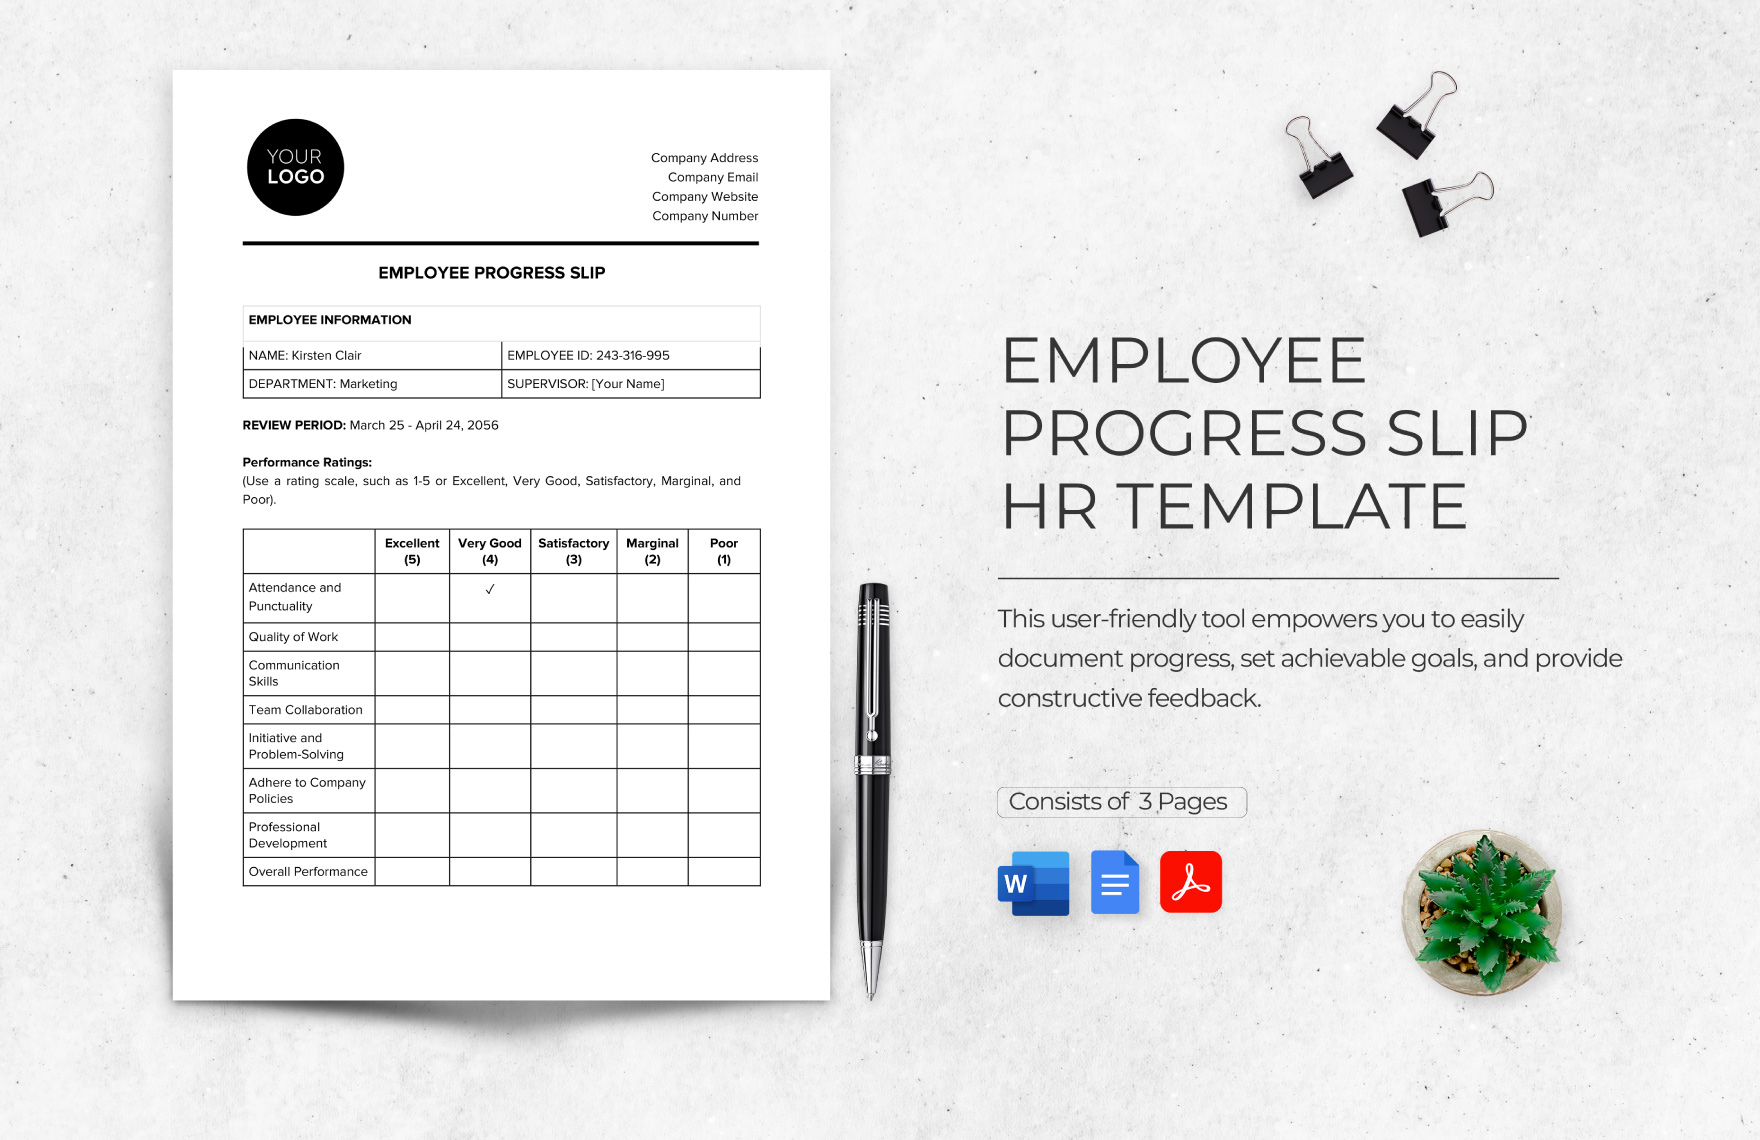 Employee Progress Slip HR Template